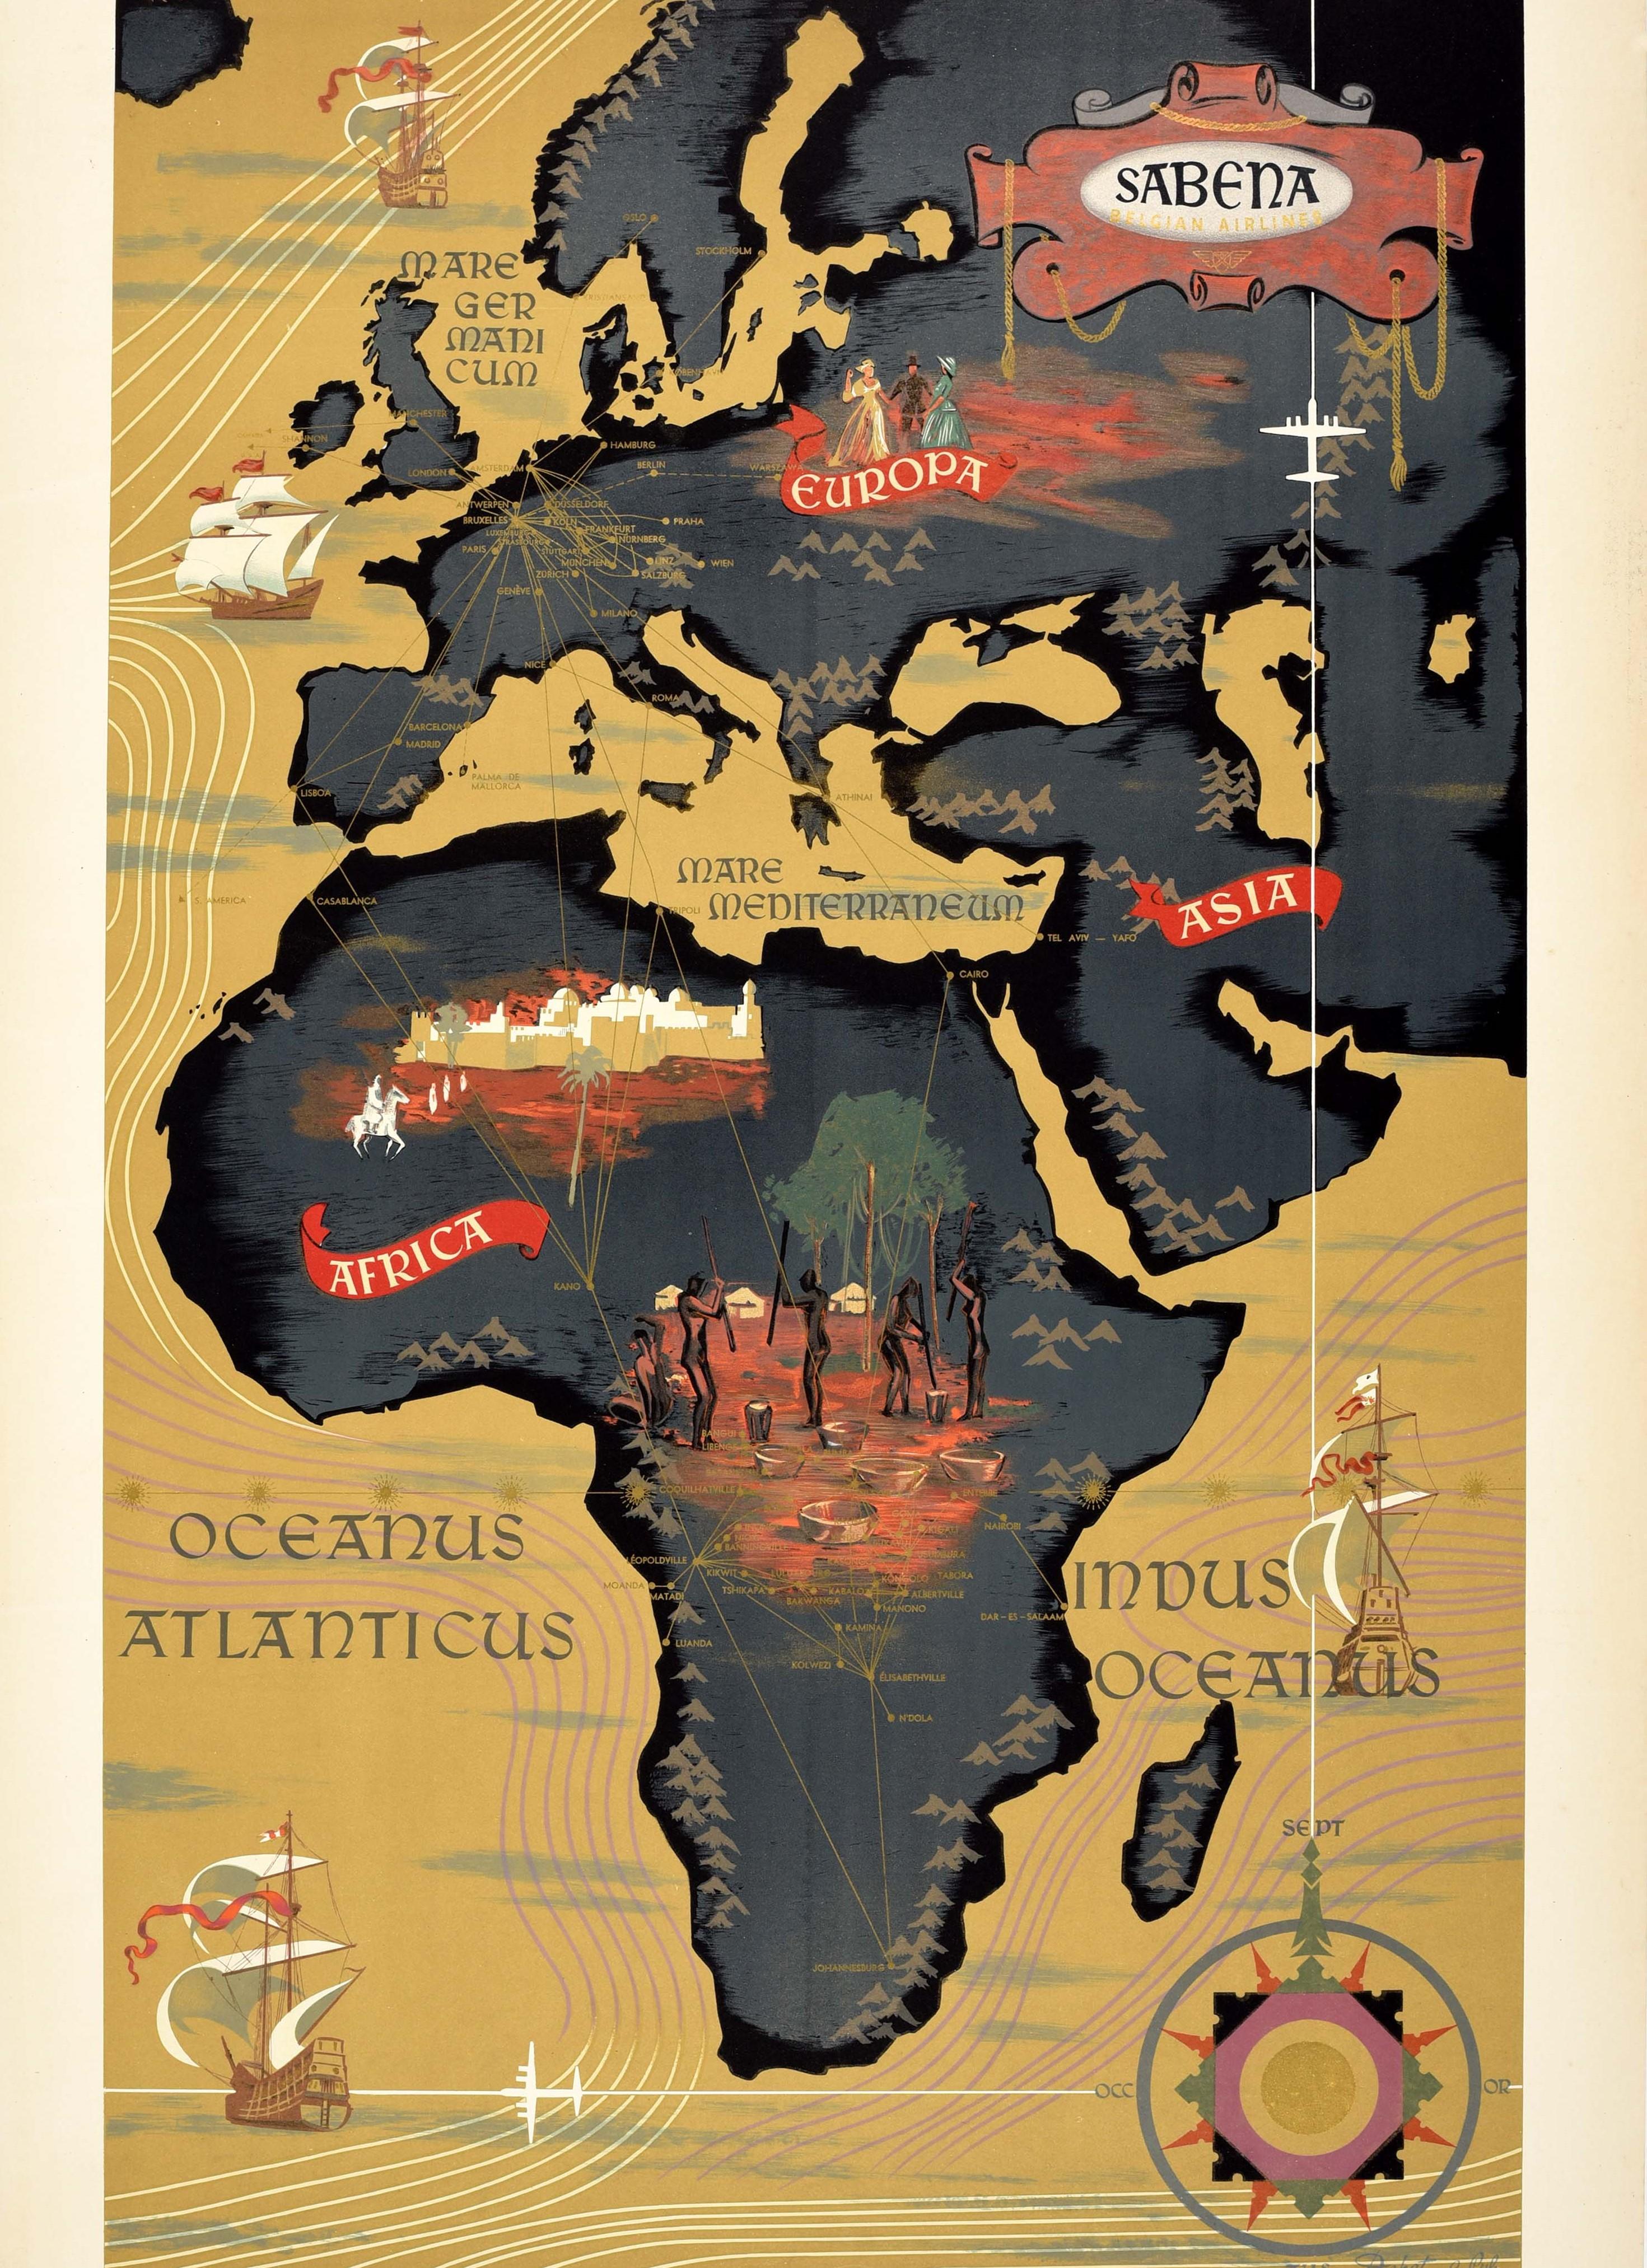 Sabena Belgium Europe Vintage Airline Airlines Travel Advertisement Poster Print 